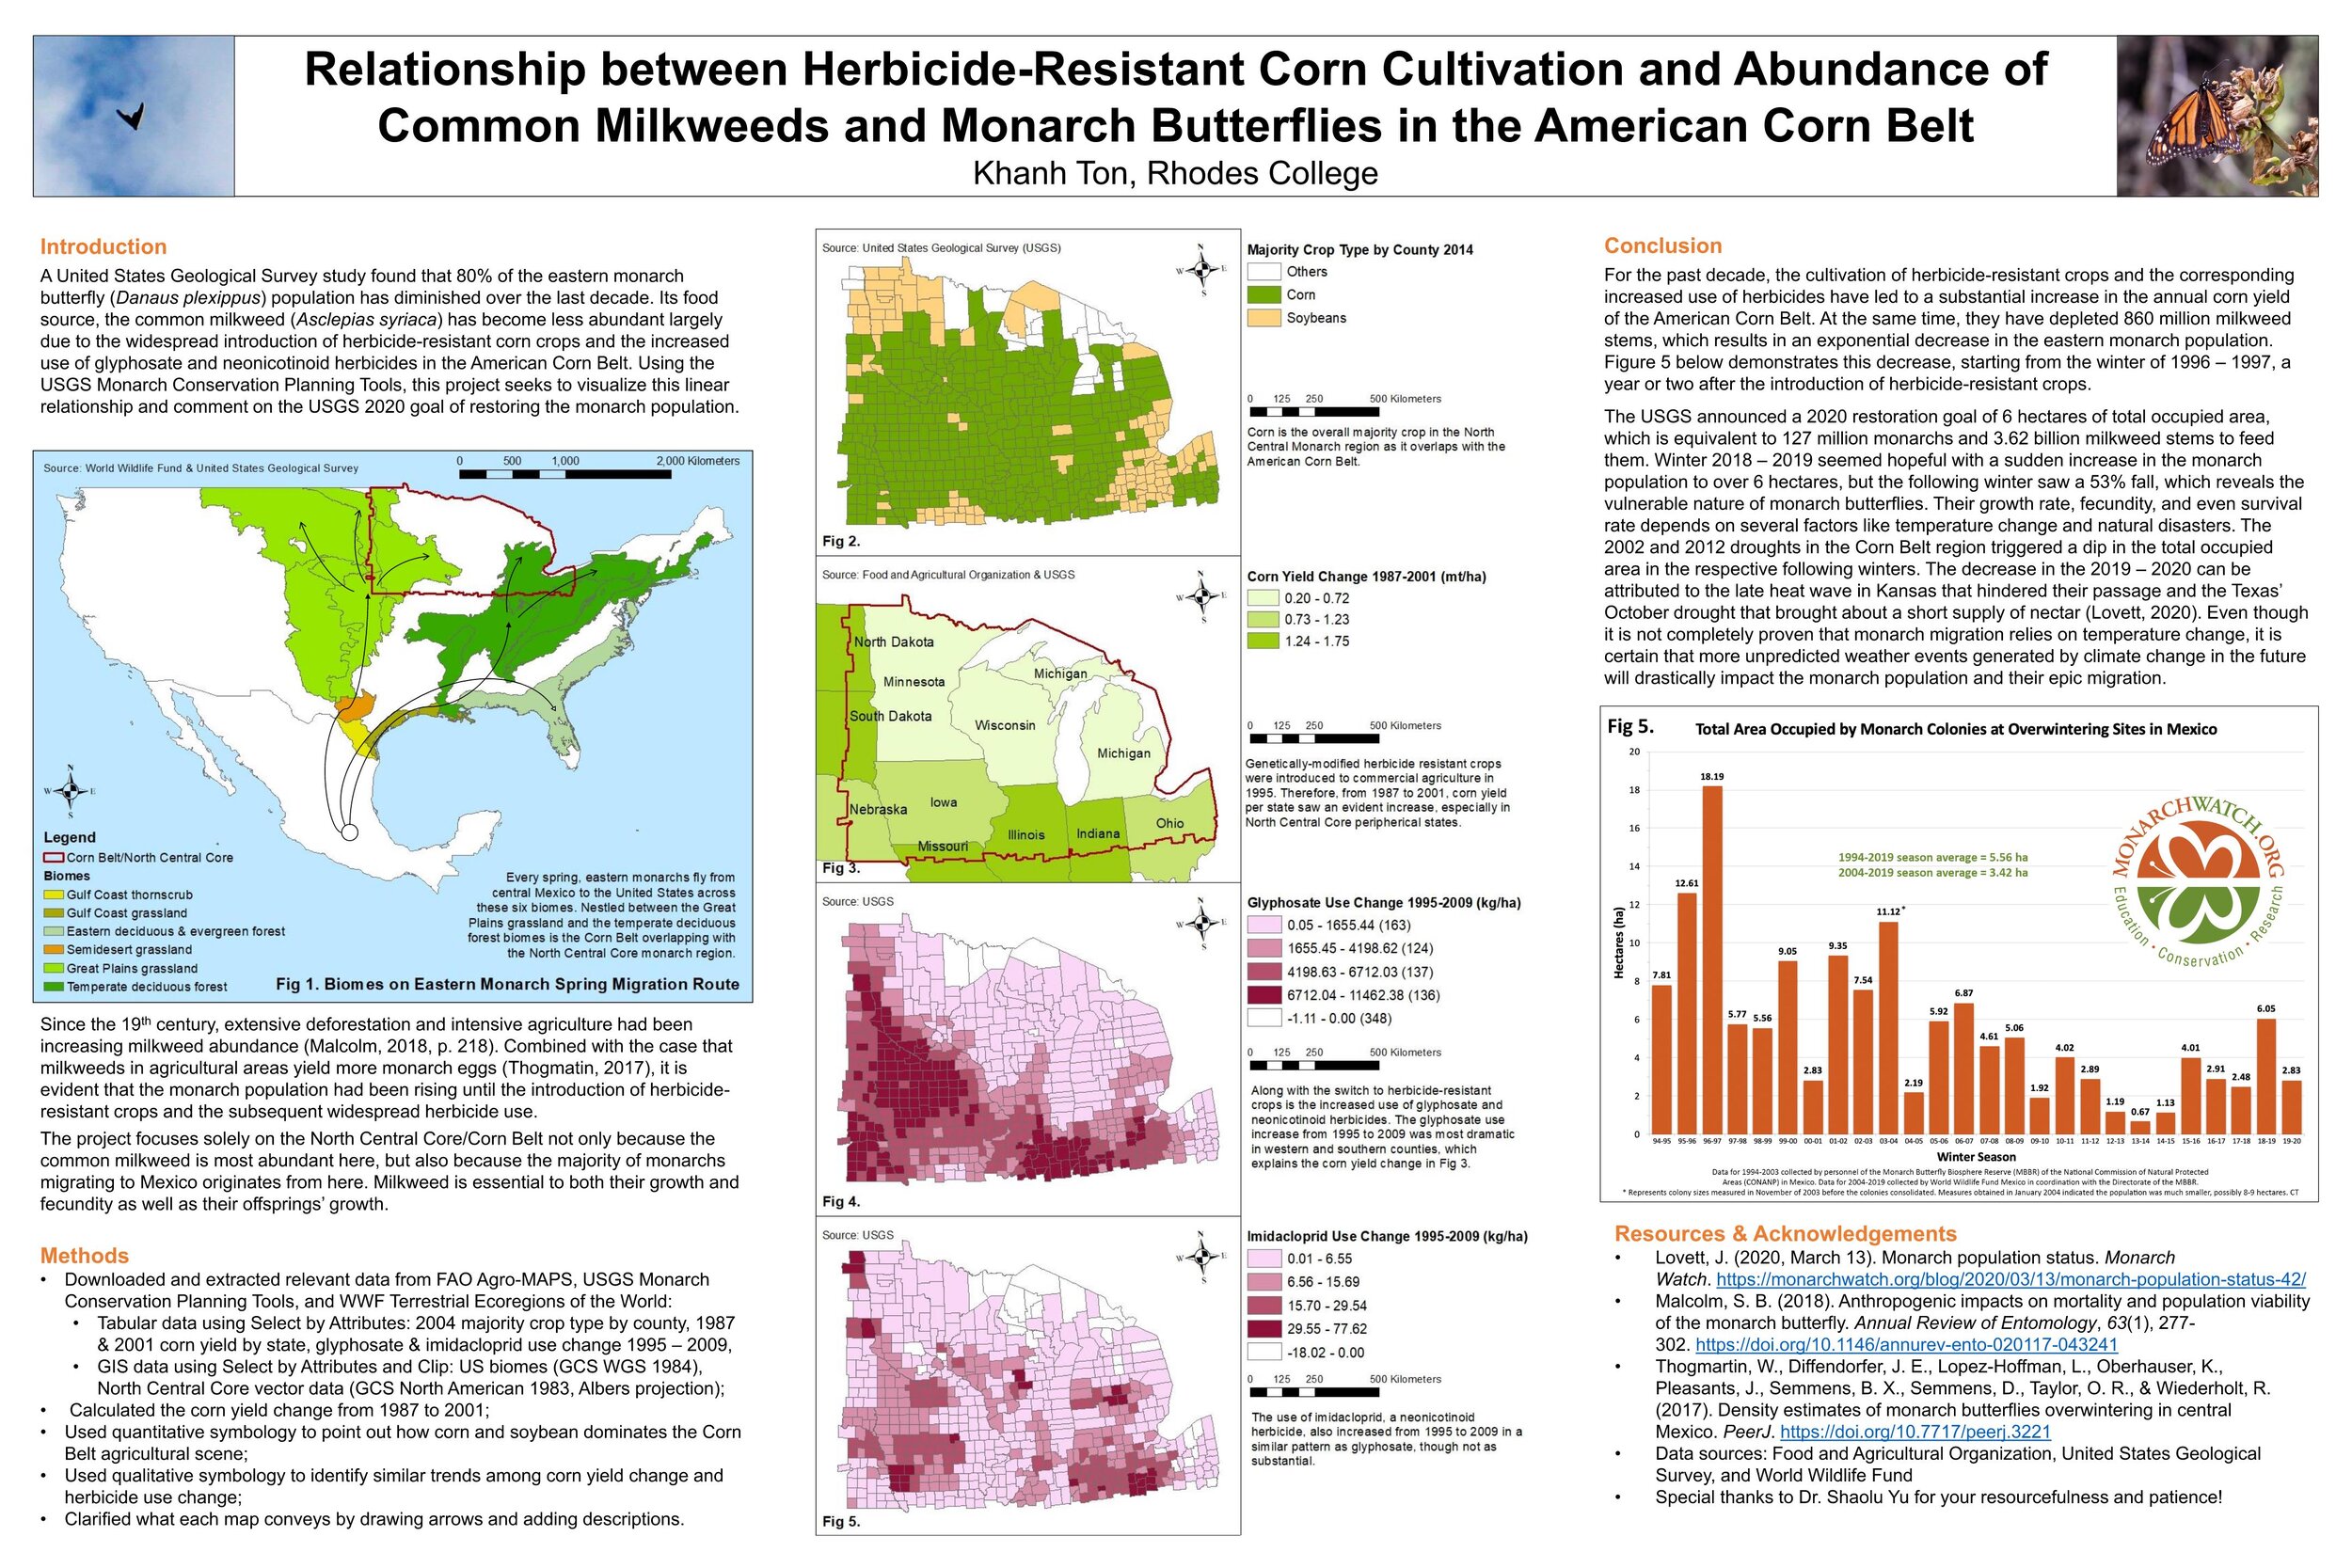 Relationship between Herbicide-Resistant Corn Cultivation and Abundance of Common Milkweeds and Monarch Butterflies in the American Corn Belt